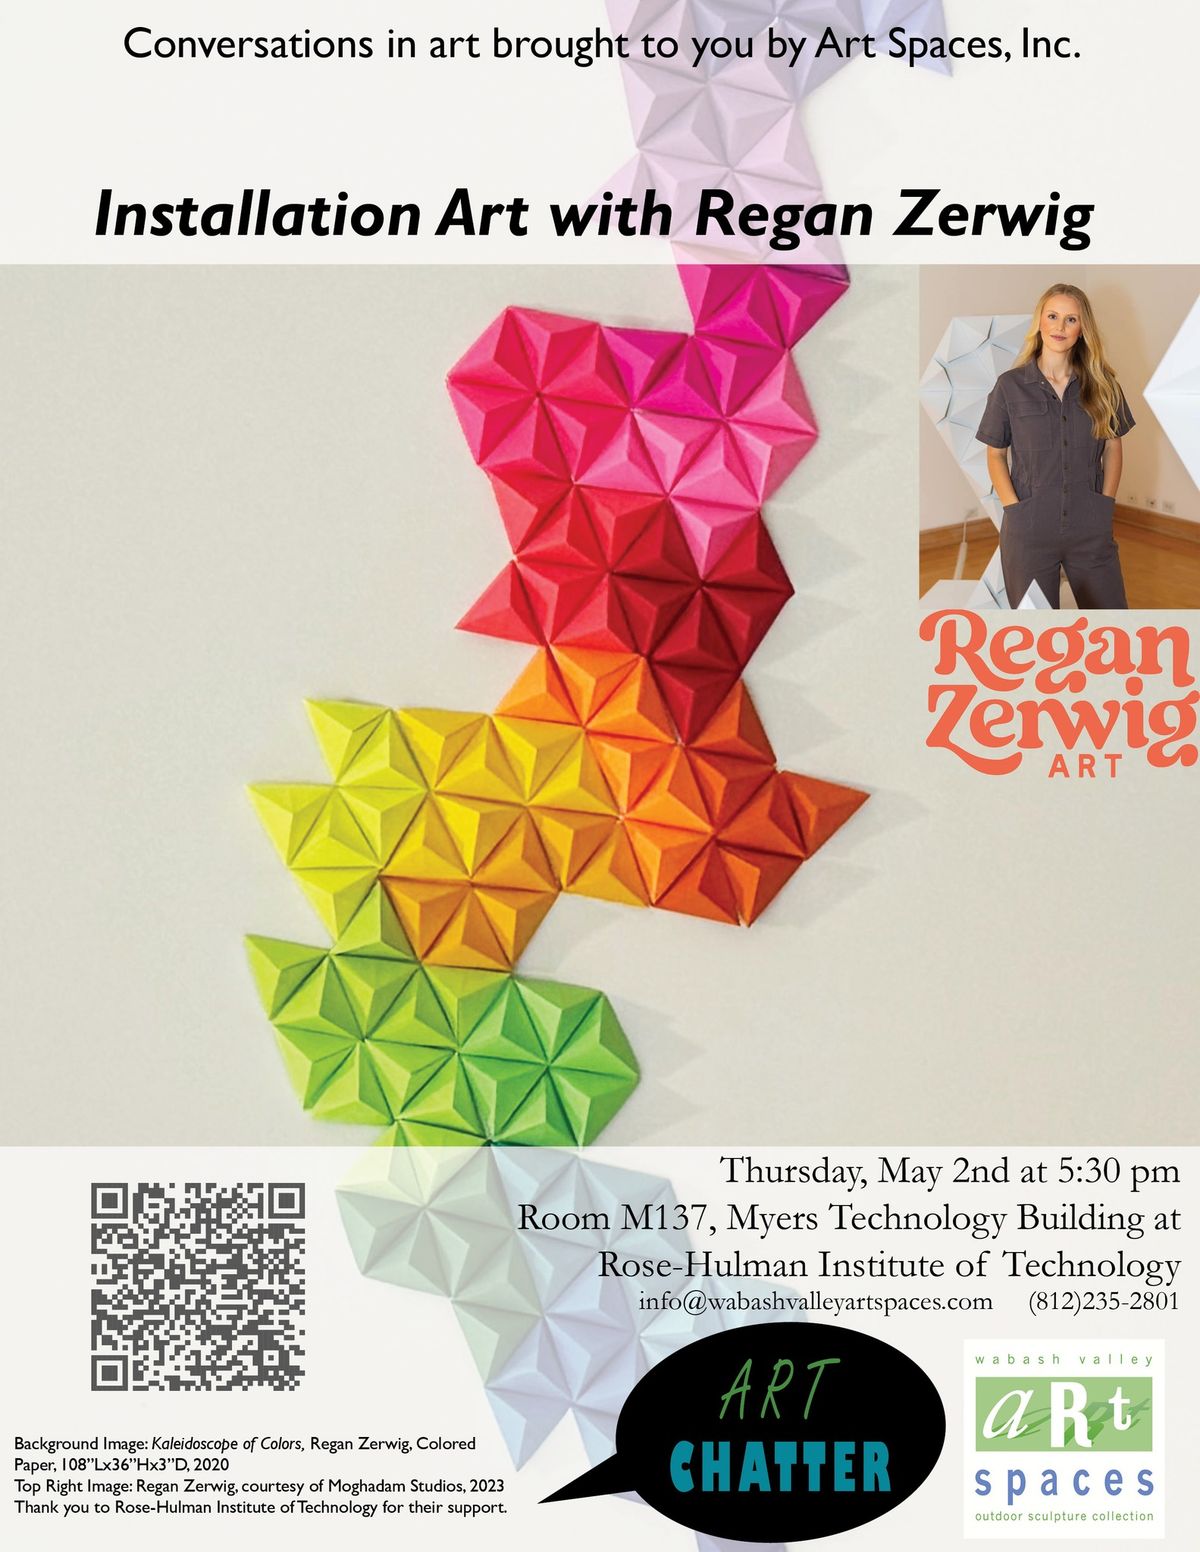 Art Chatter: "Installation Art" featuring Regan Zerwig